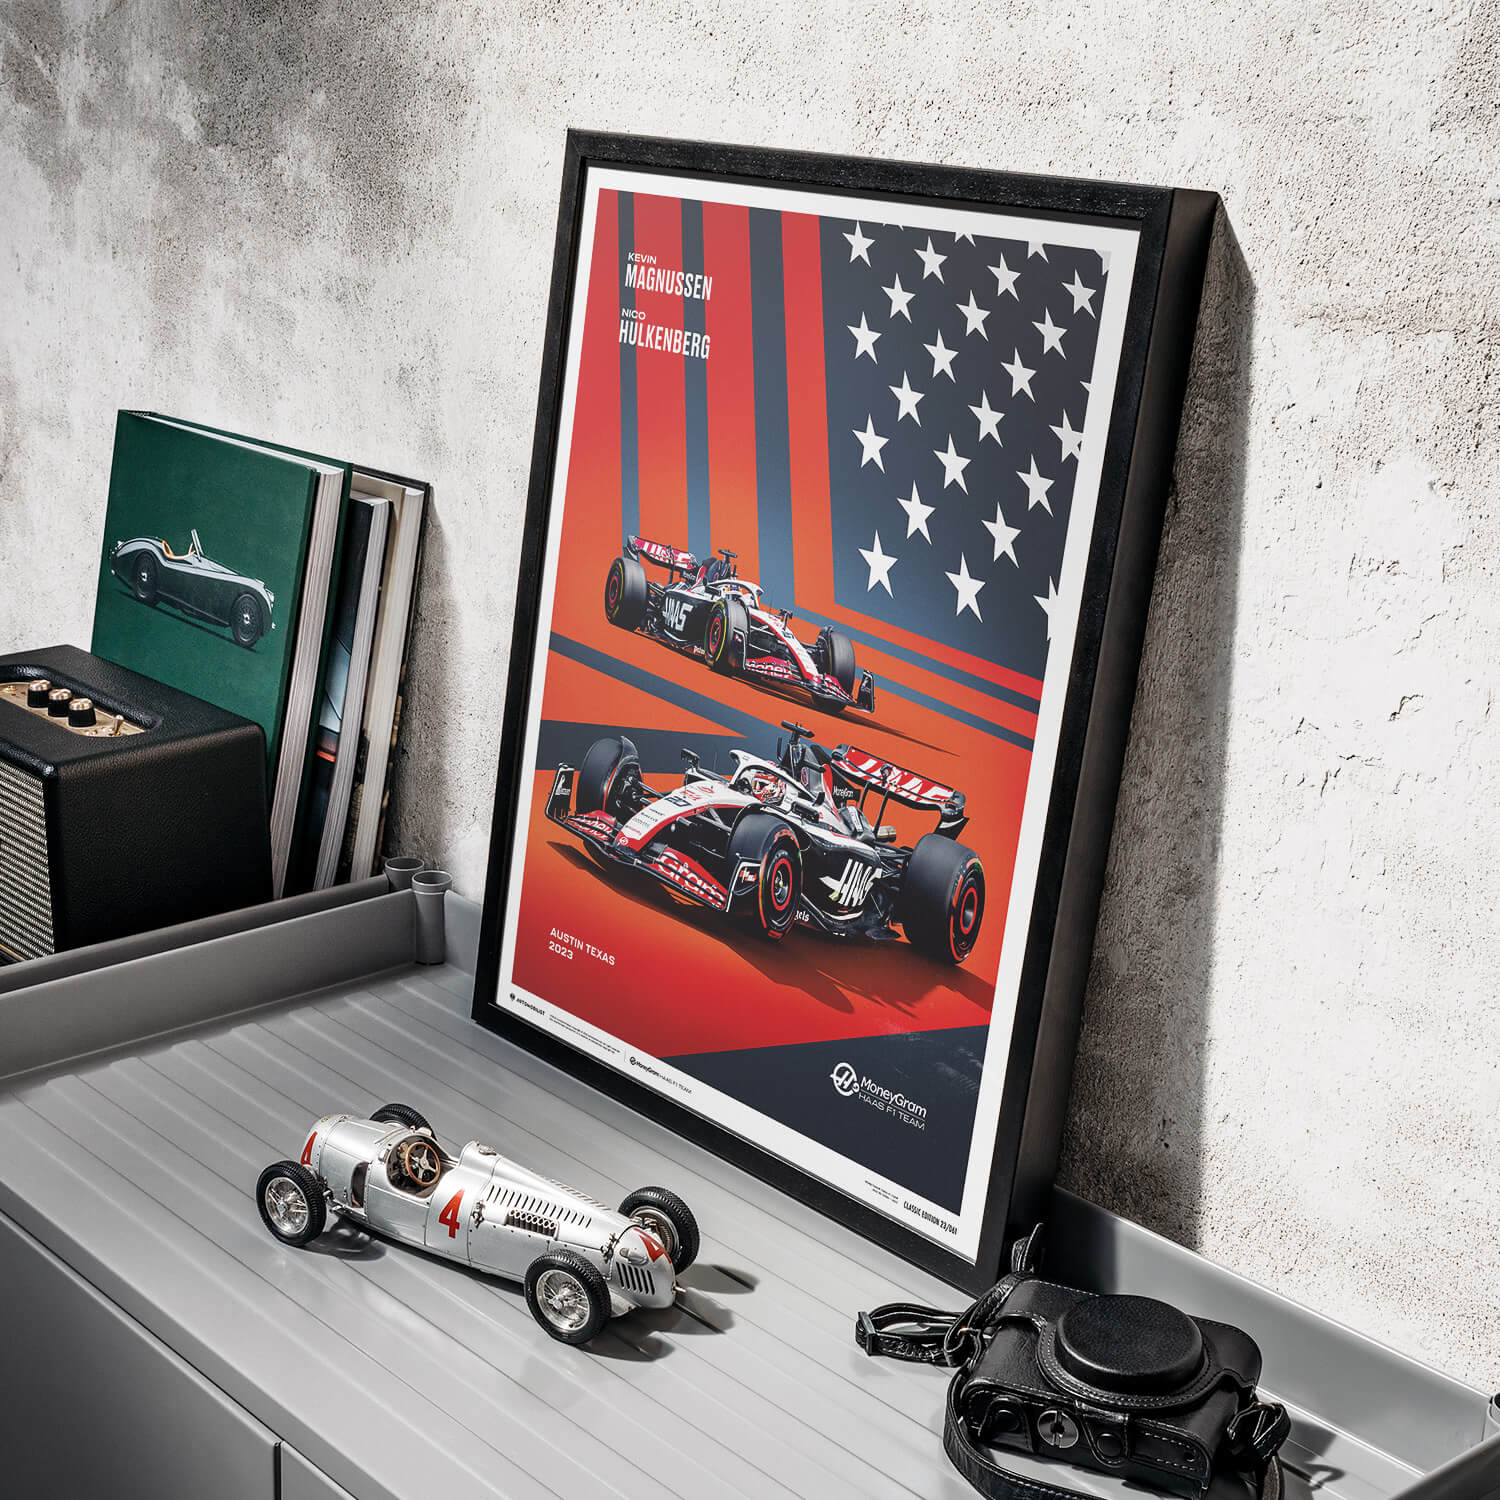 MoneyGram Haas F1 Team - United States Grand Prix - 2023